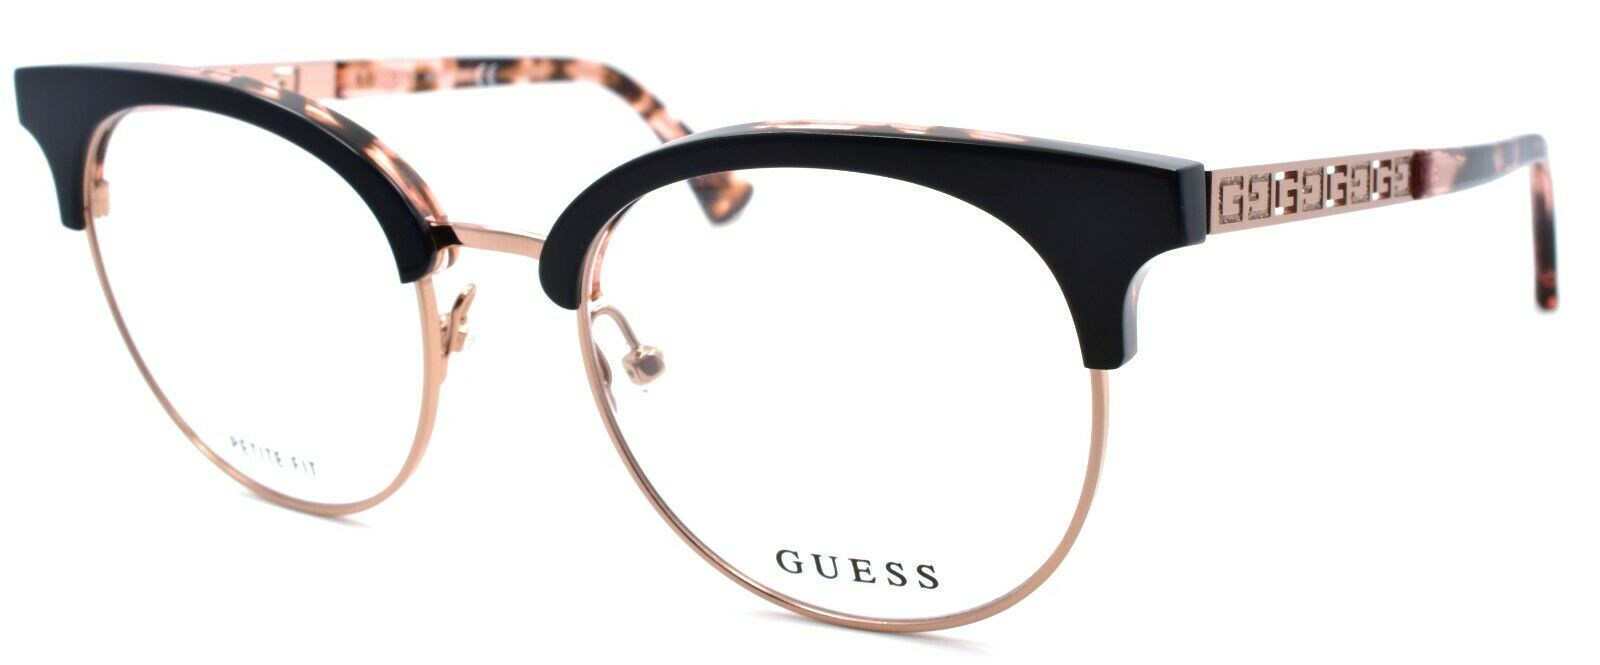 1-GUESS GU2744 005 Women's Eyeglasses Frames Petite 49-19-140 Black / Rose Gold-889214111180-IKSpecs